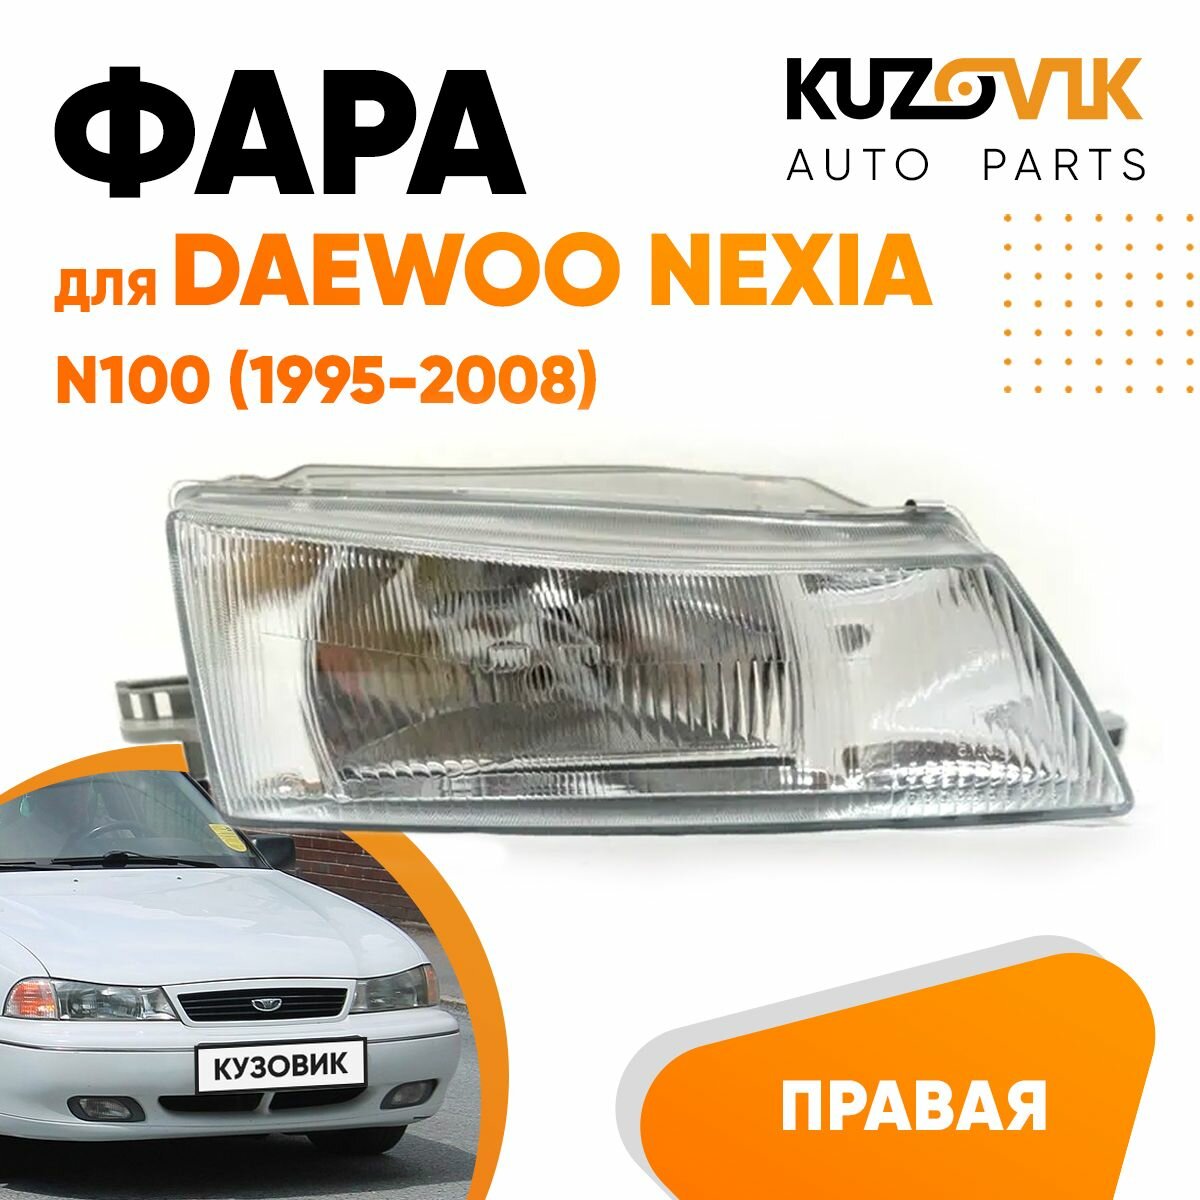 Фара левая механическая Daewoo Nexia N100 (1995-2008)